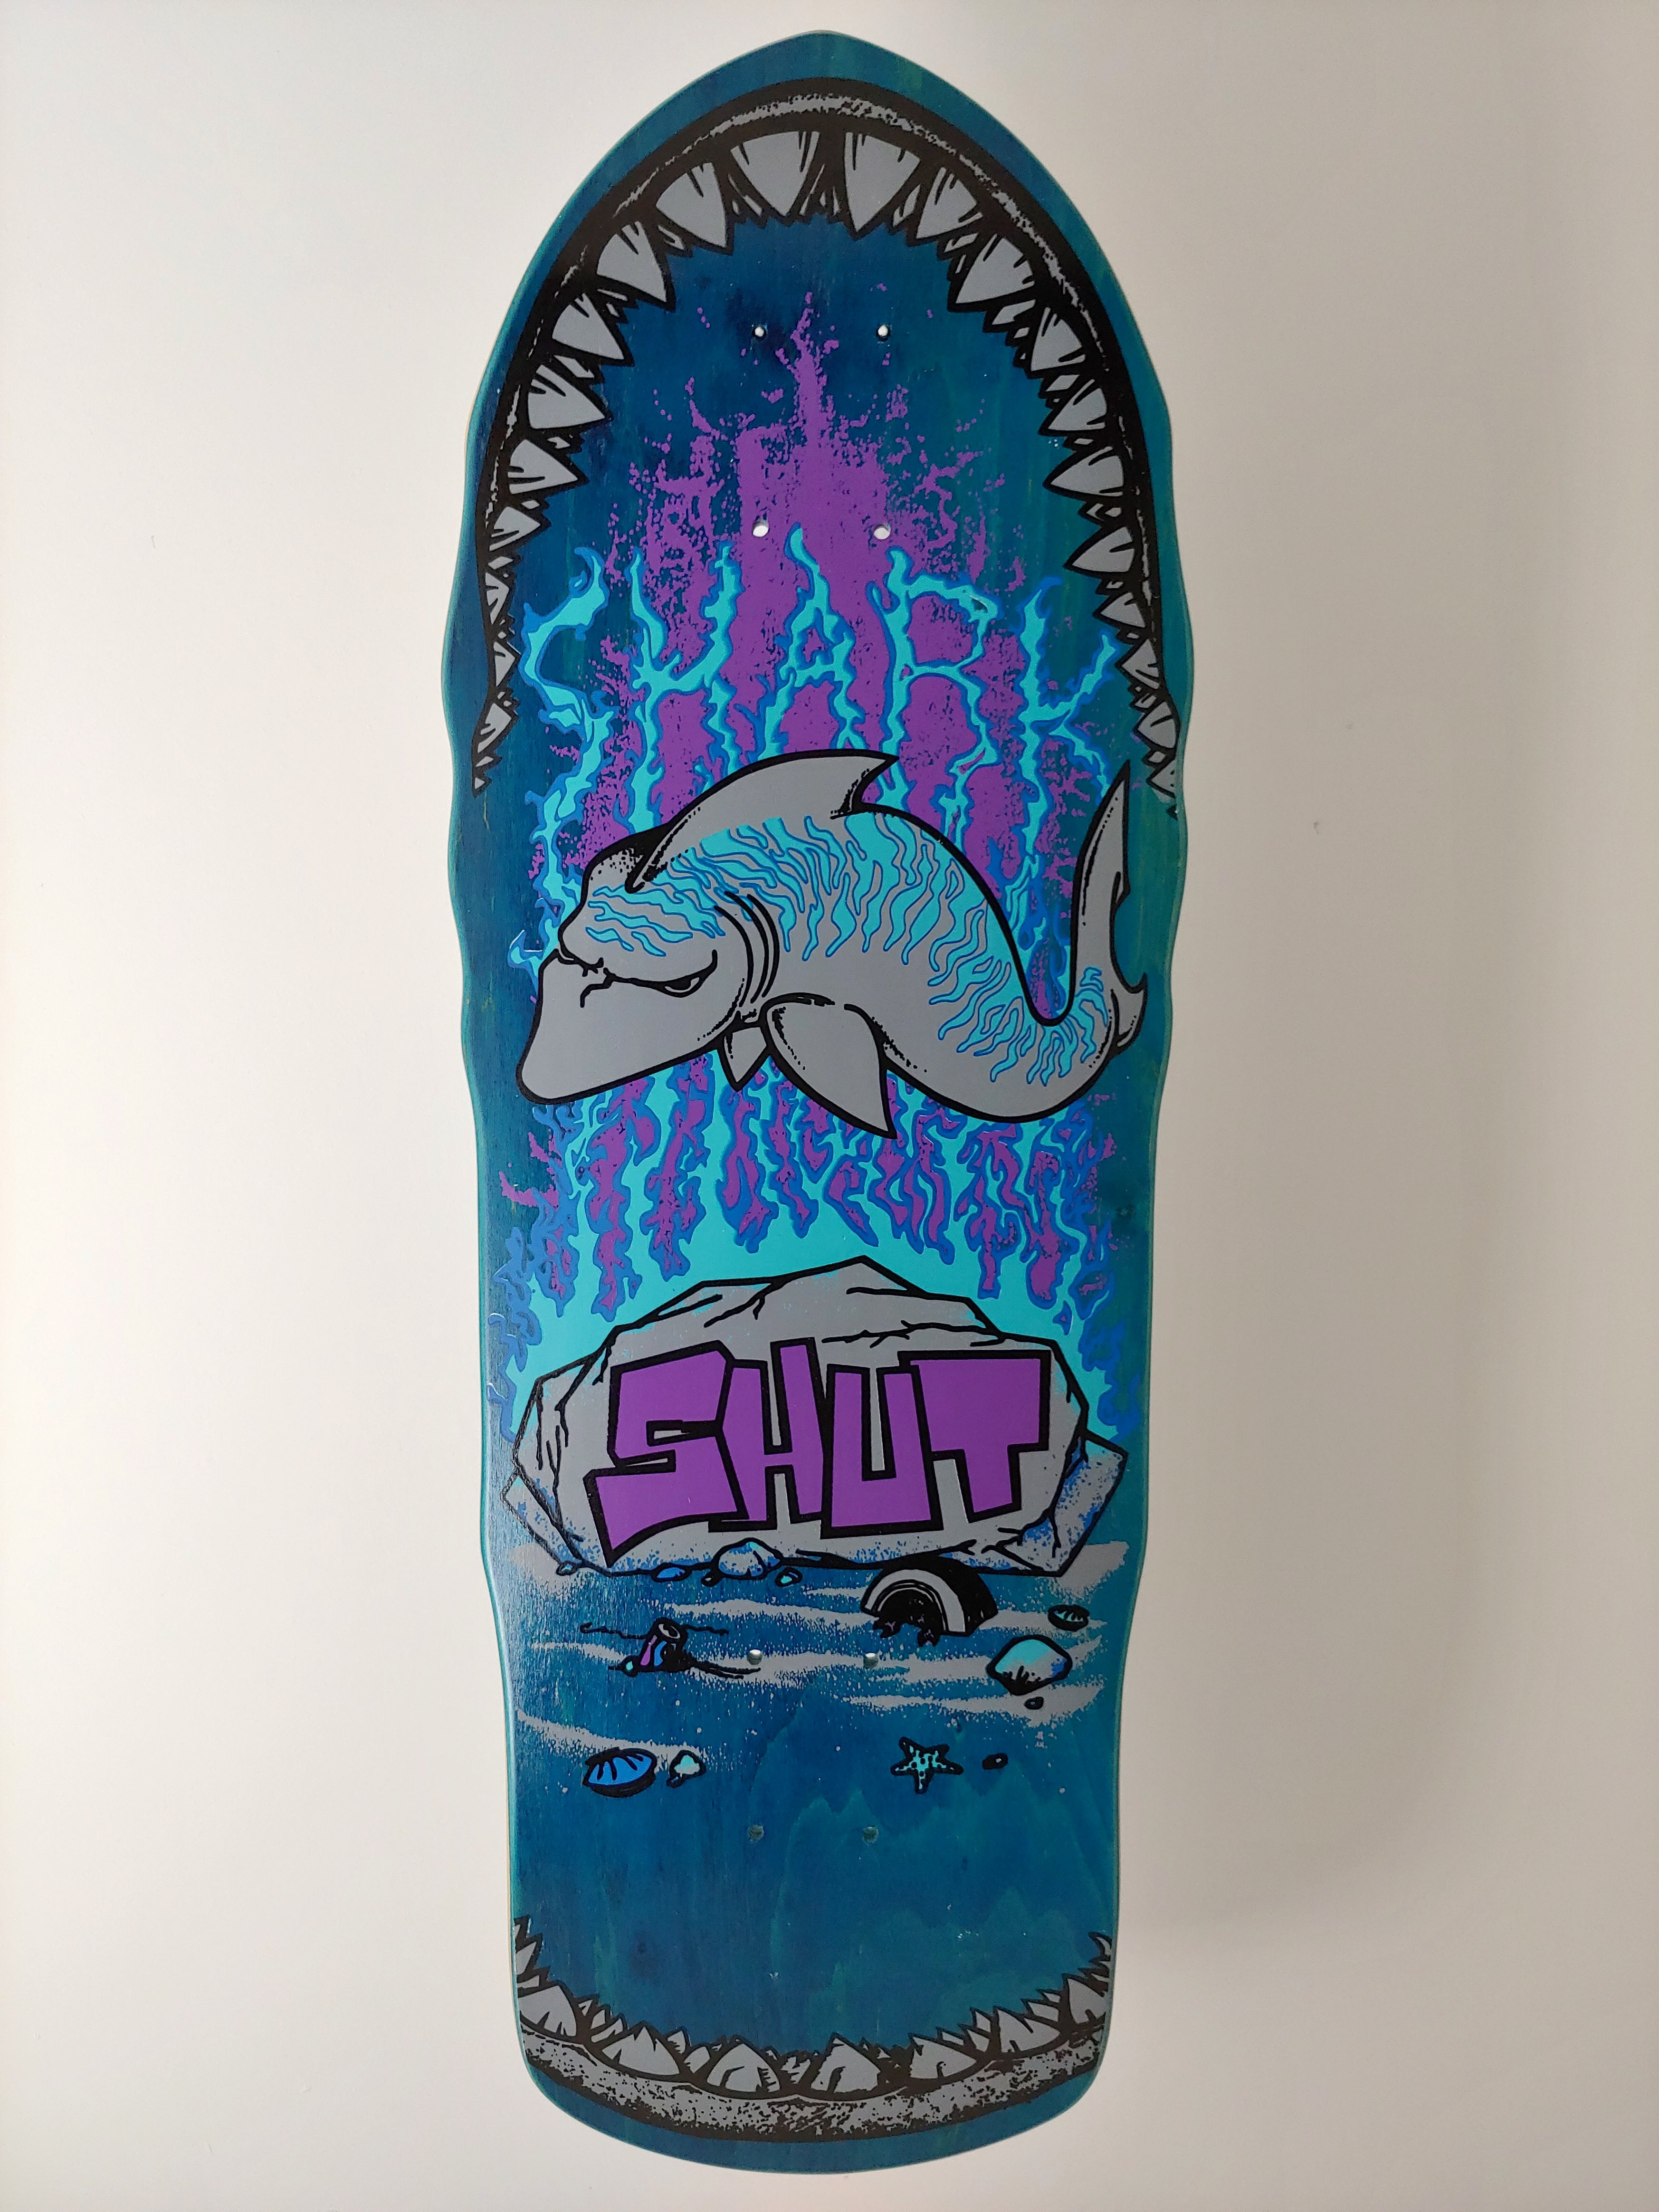 Shut Skates [Shark] Throwback Tech Deck - Galerie F